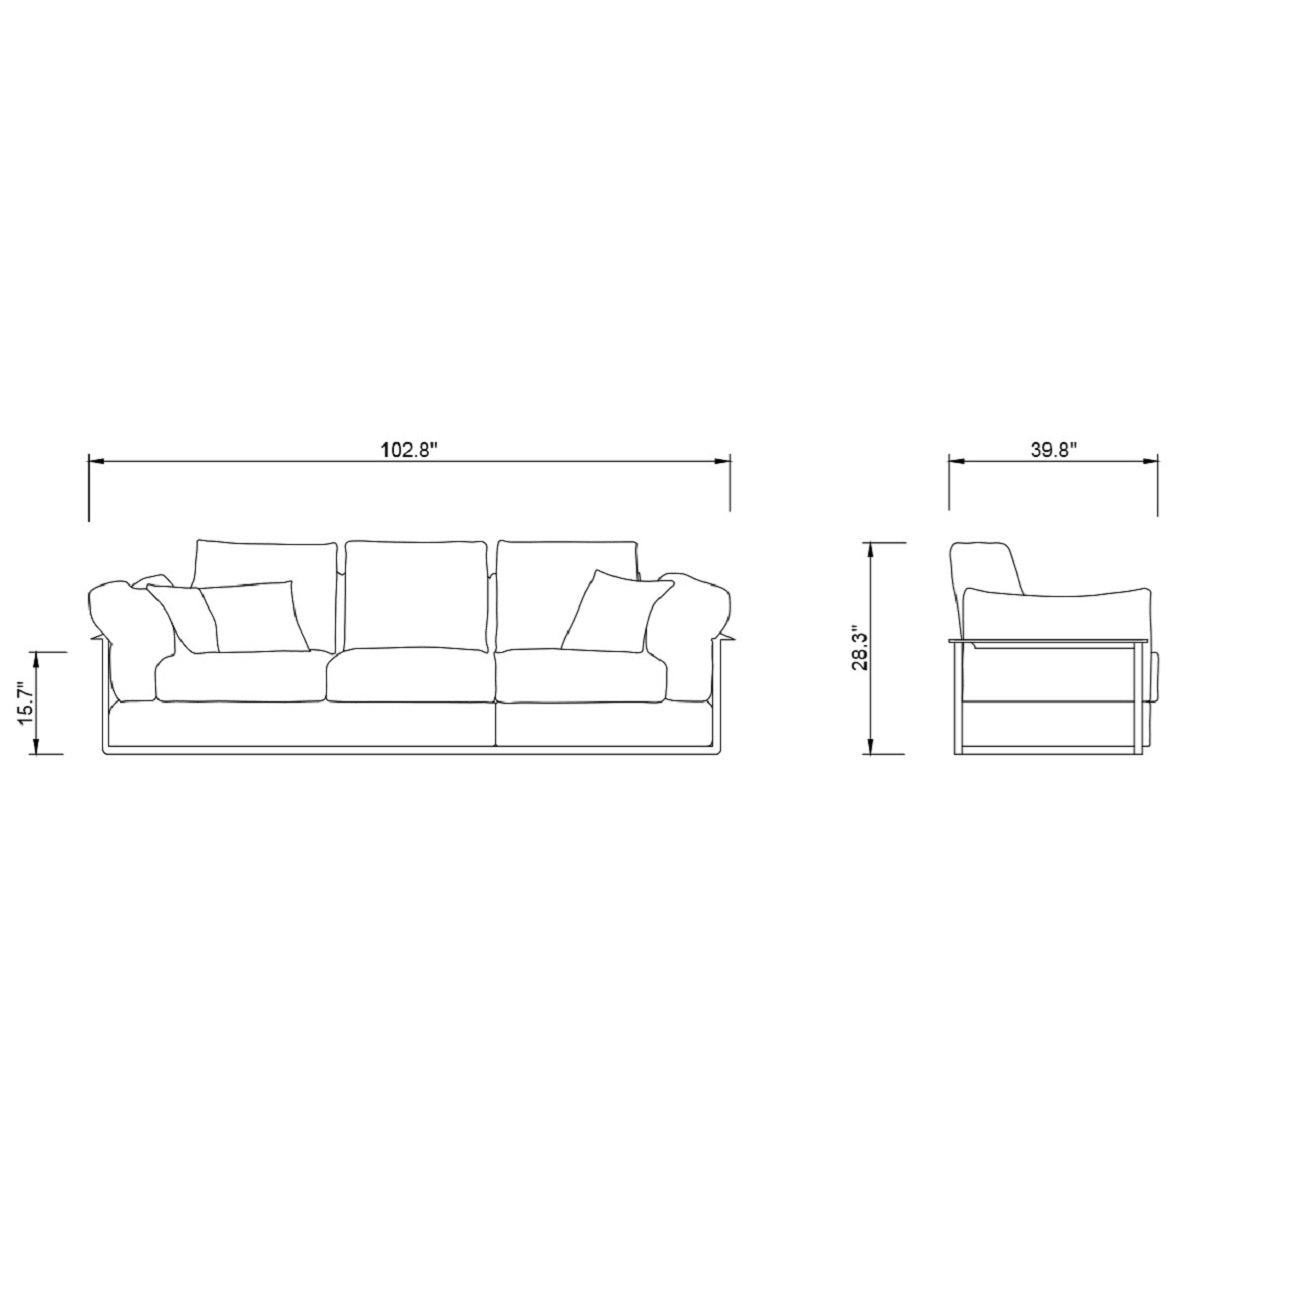 Dove 4 Seater Sofa - Furniture.Agency